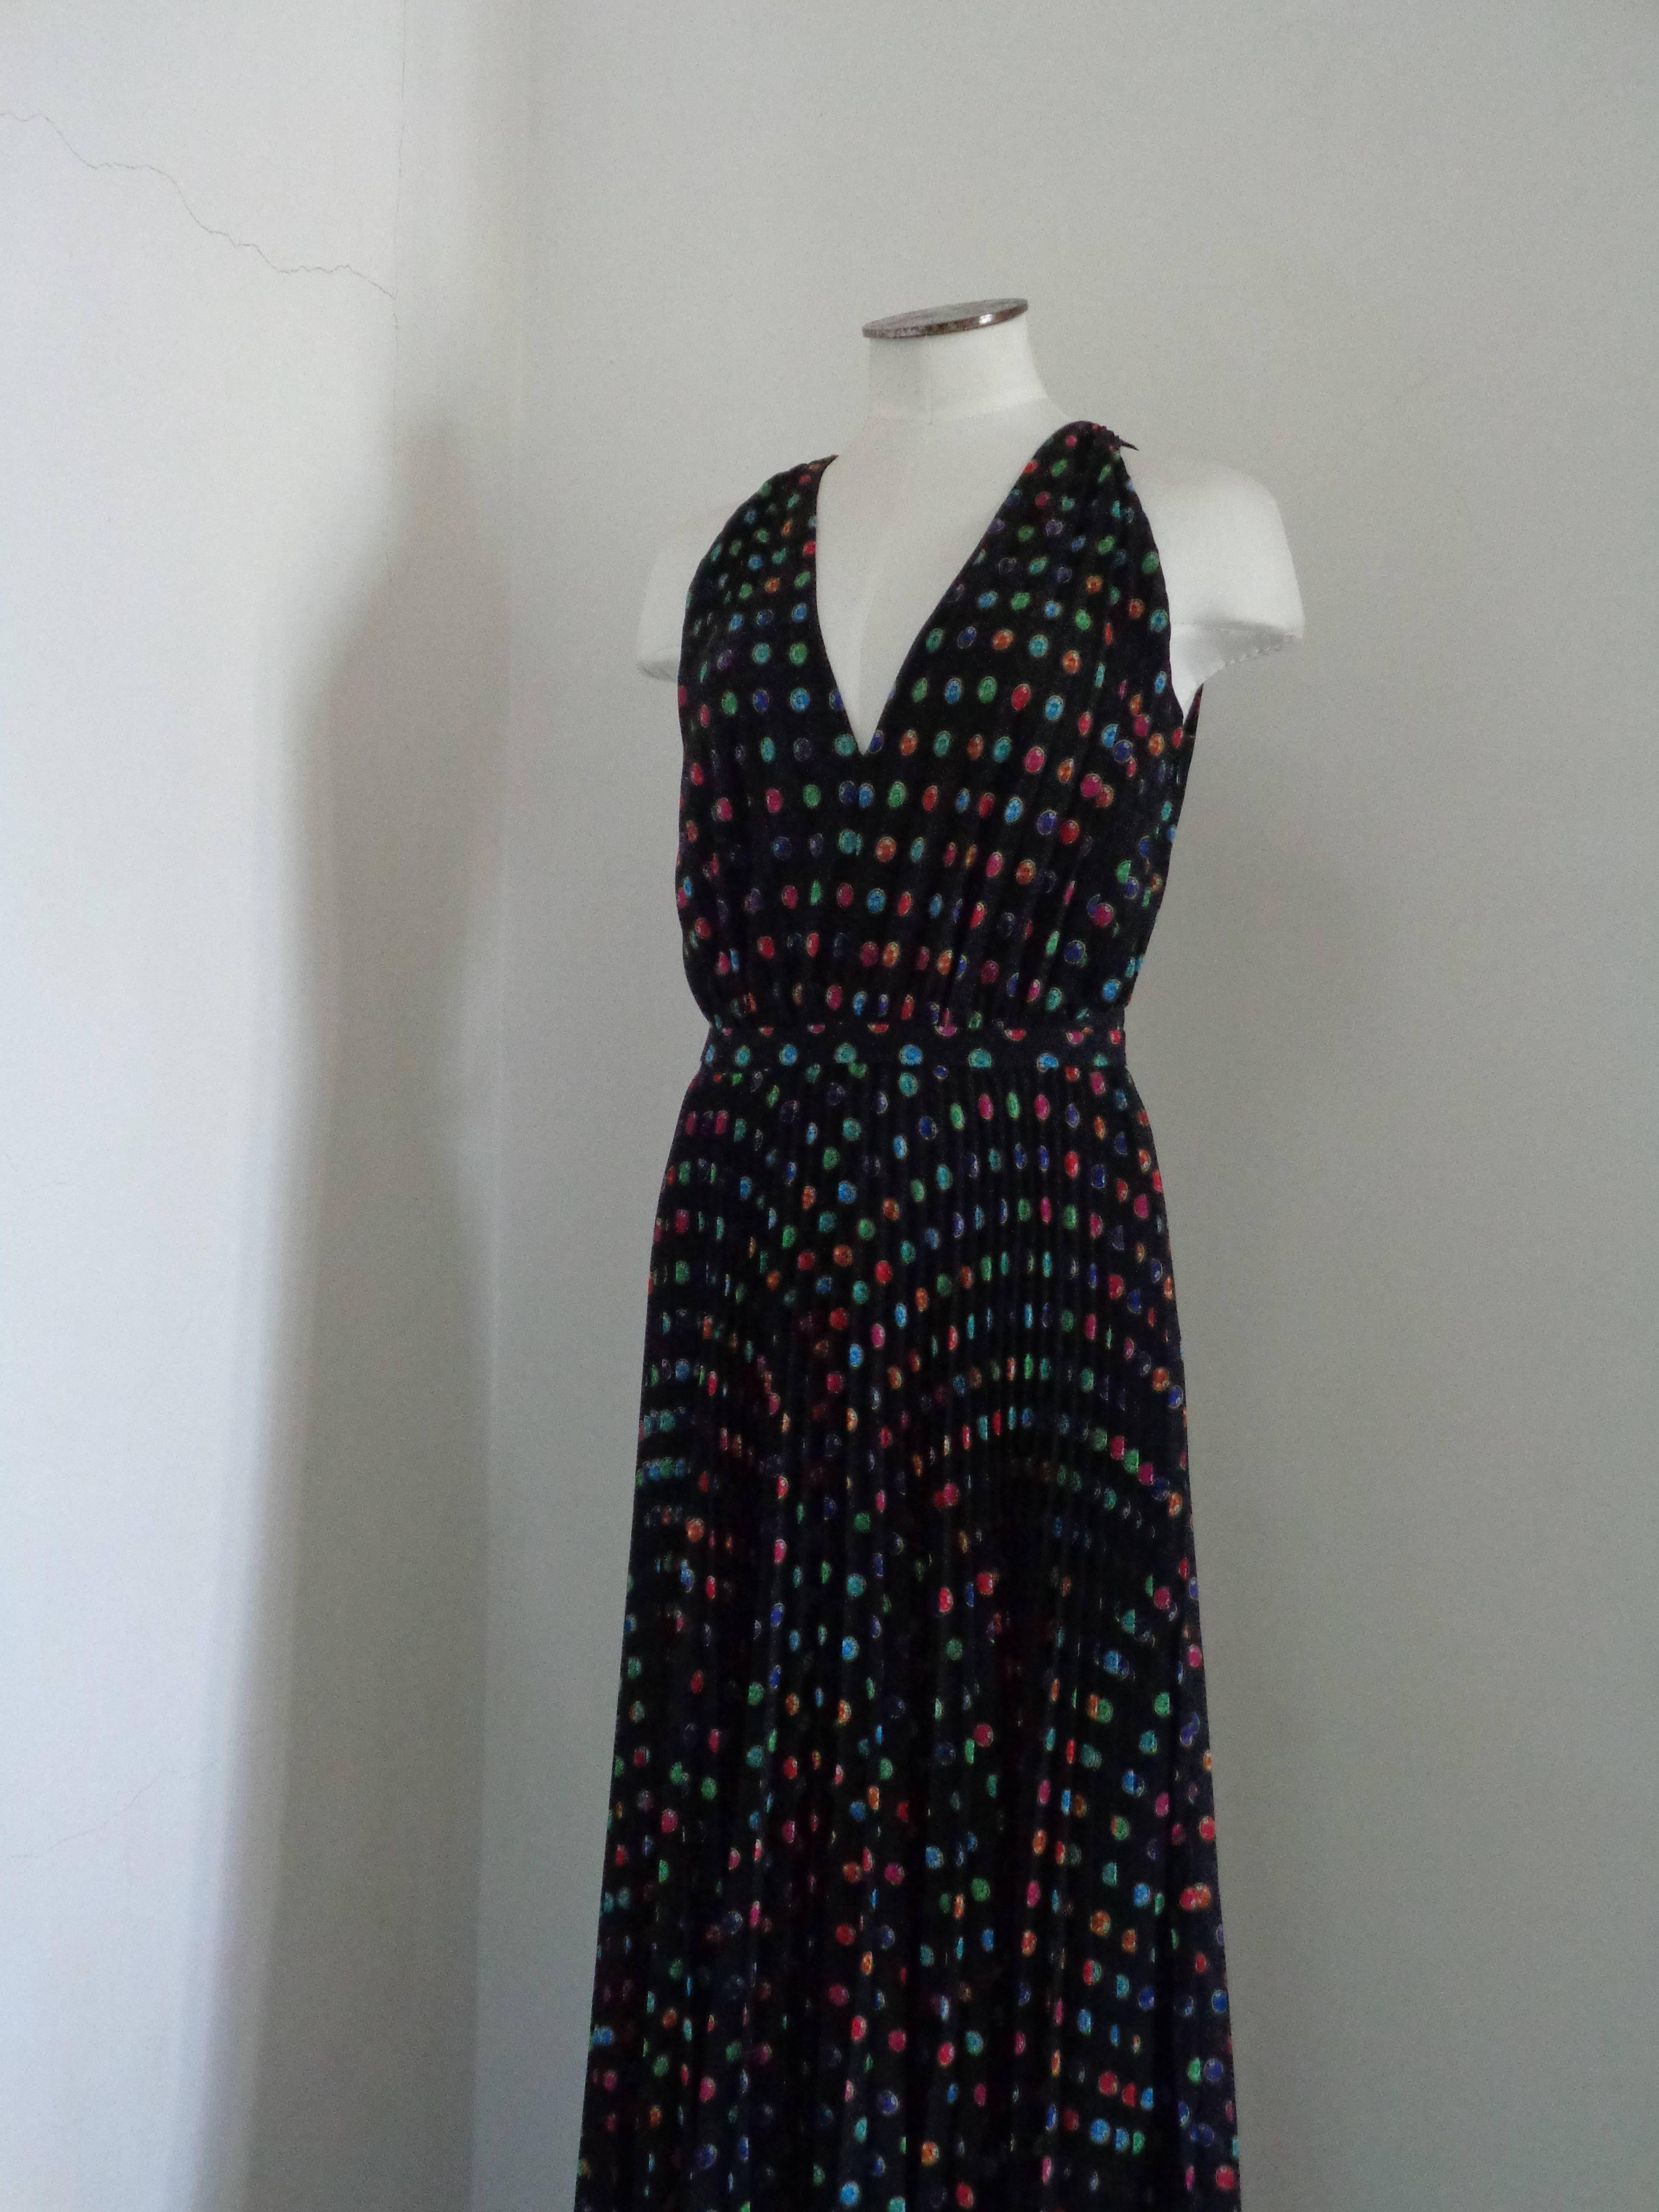 Boutique Moschino Black Long Dress Swarovski Print NWOT

Composition: Cotton & Polyestere

Size 42 in italian size range